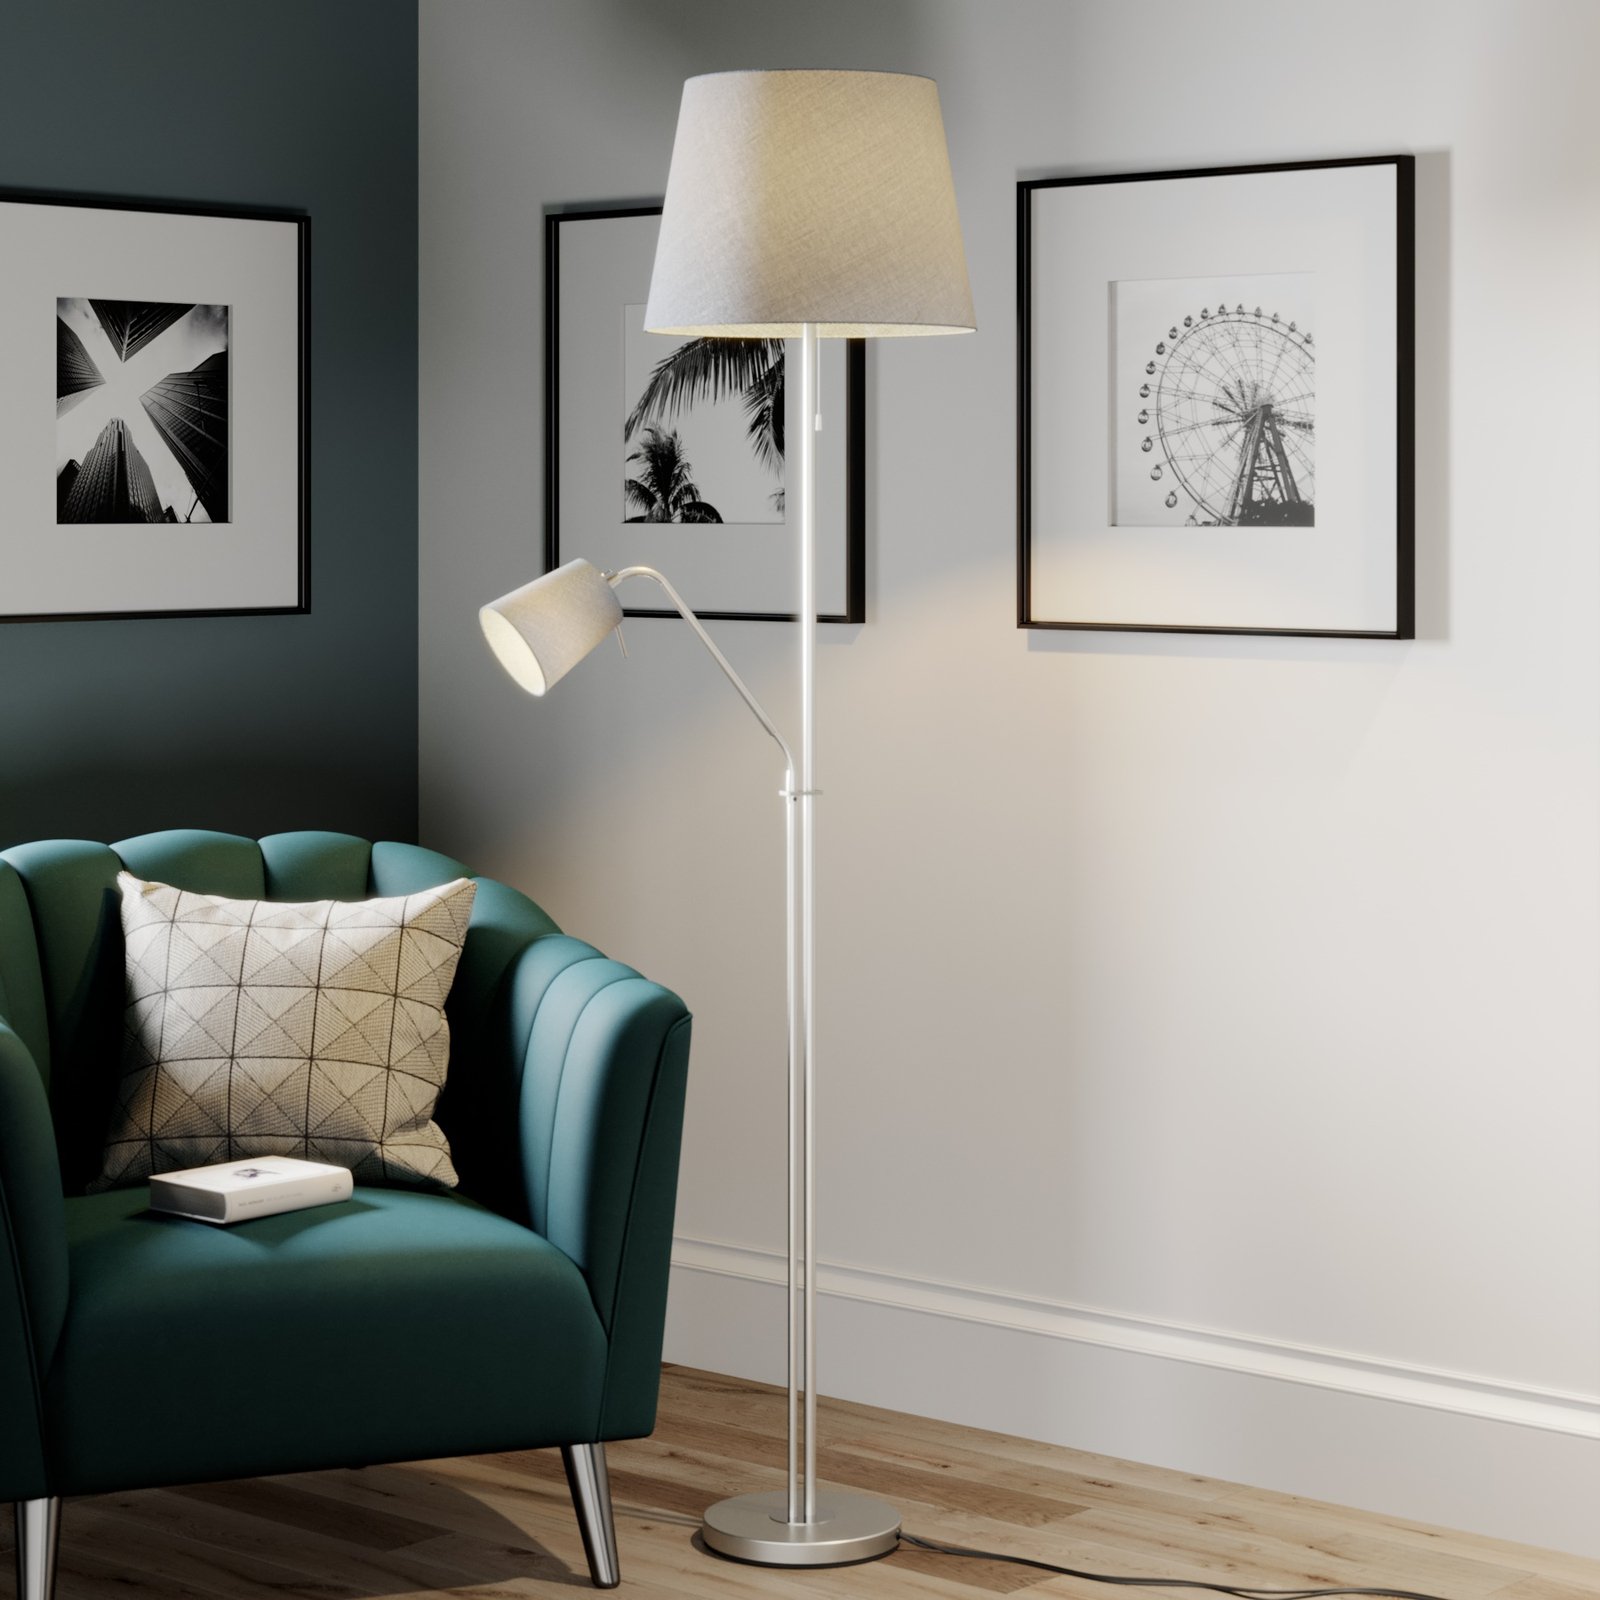 Lindby Nantwin floor lamp, fabric lampshade, grey